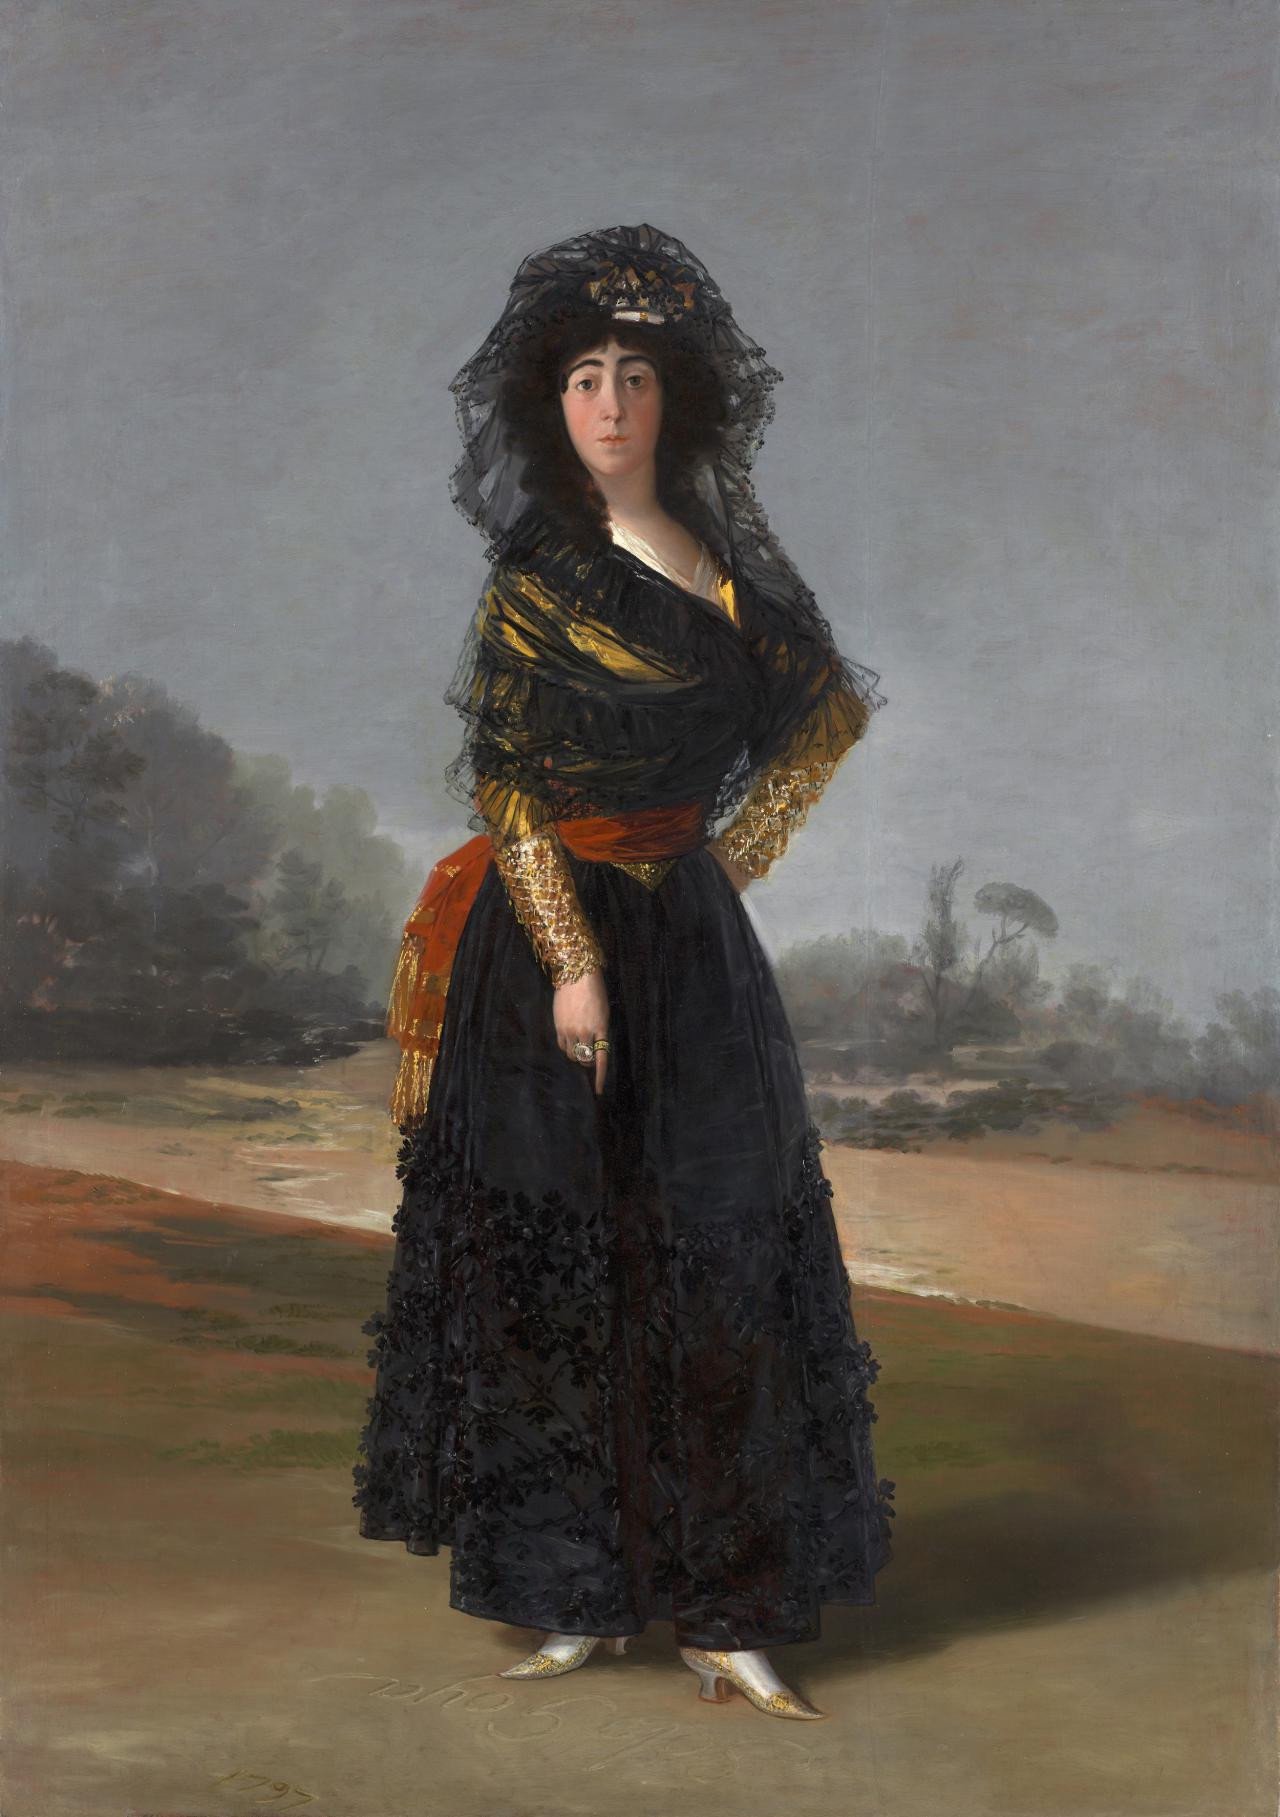 De hertogin van Alba by Francisco Goya - 1797 - 210 x 148 cm 